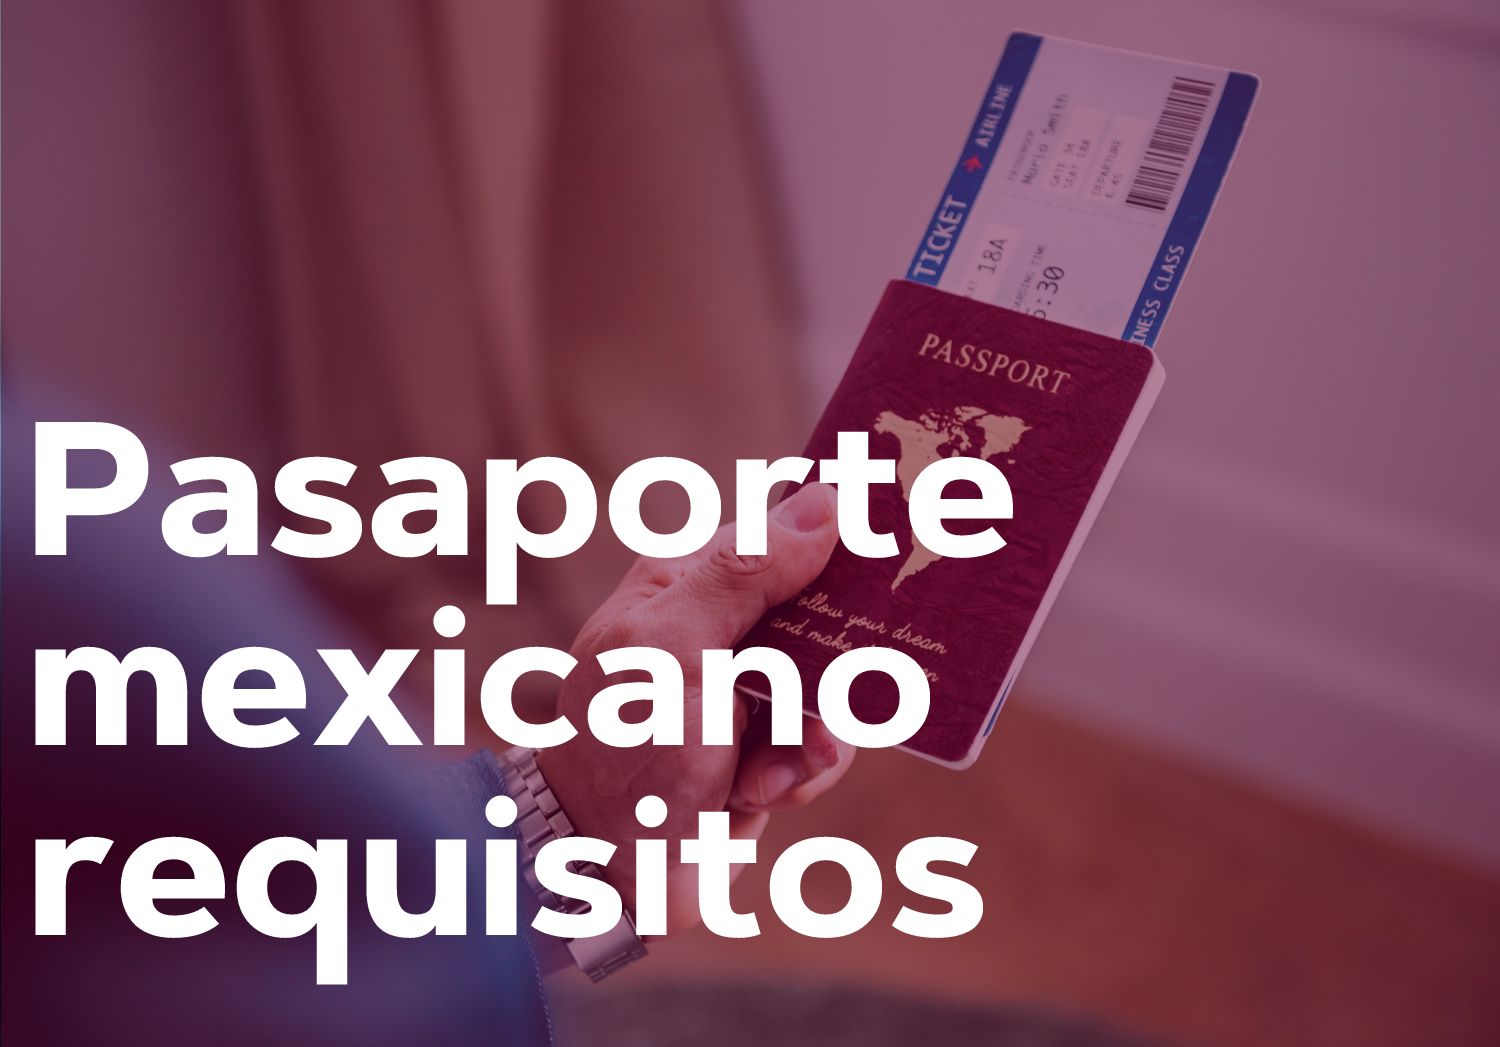 Pasaporte mexicano requisitos